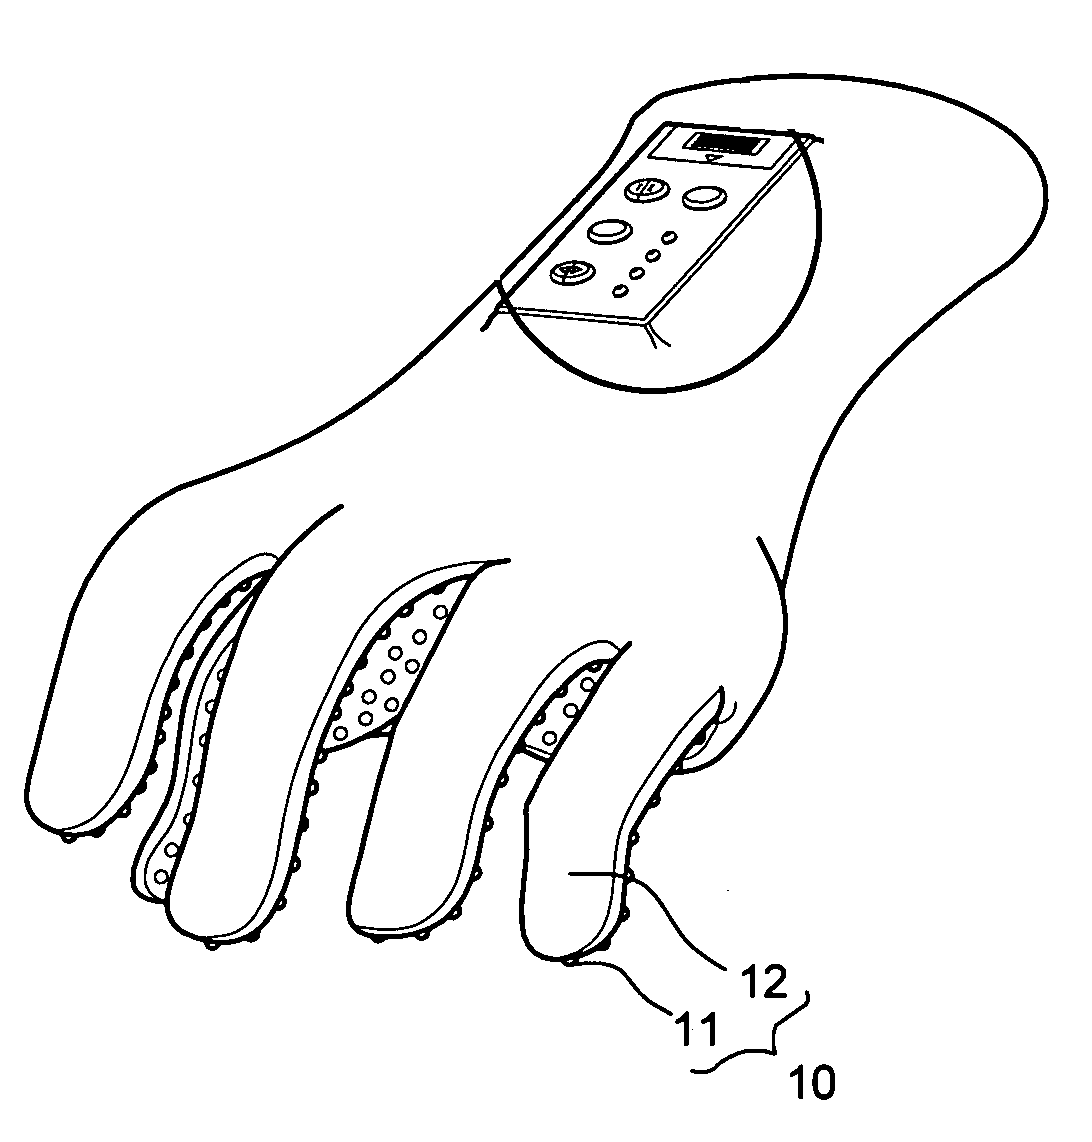 Finger pressing massage glove